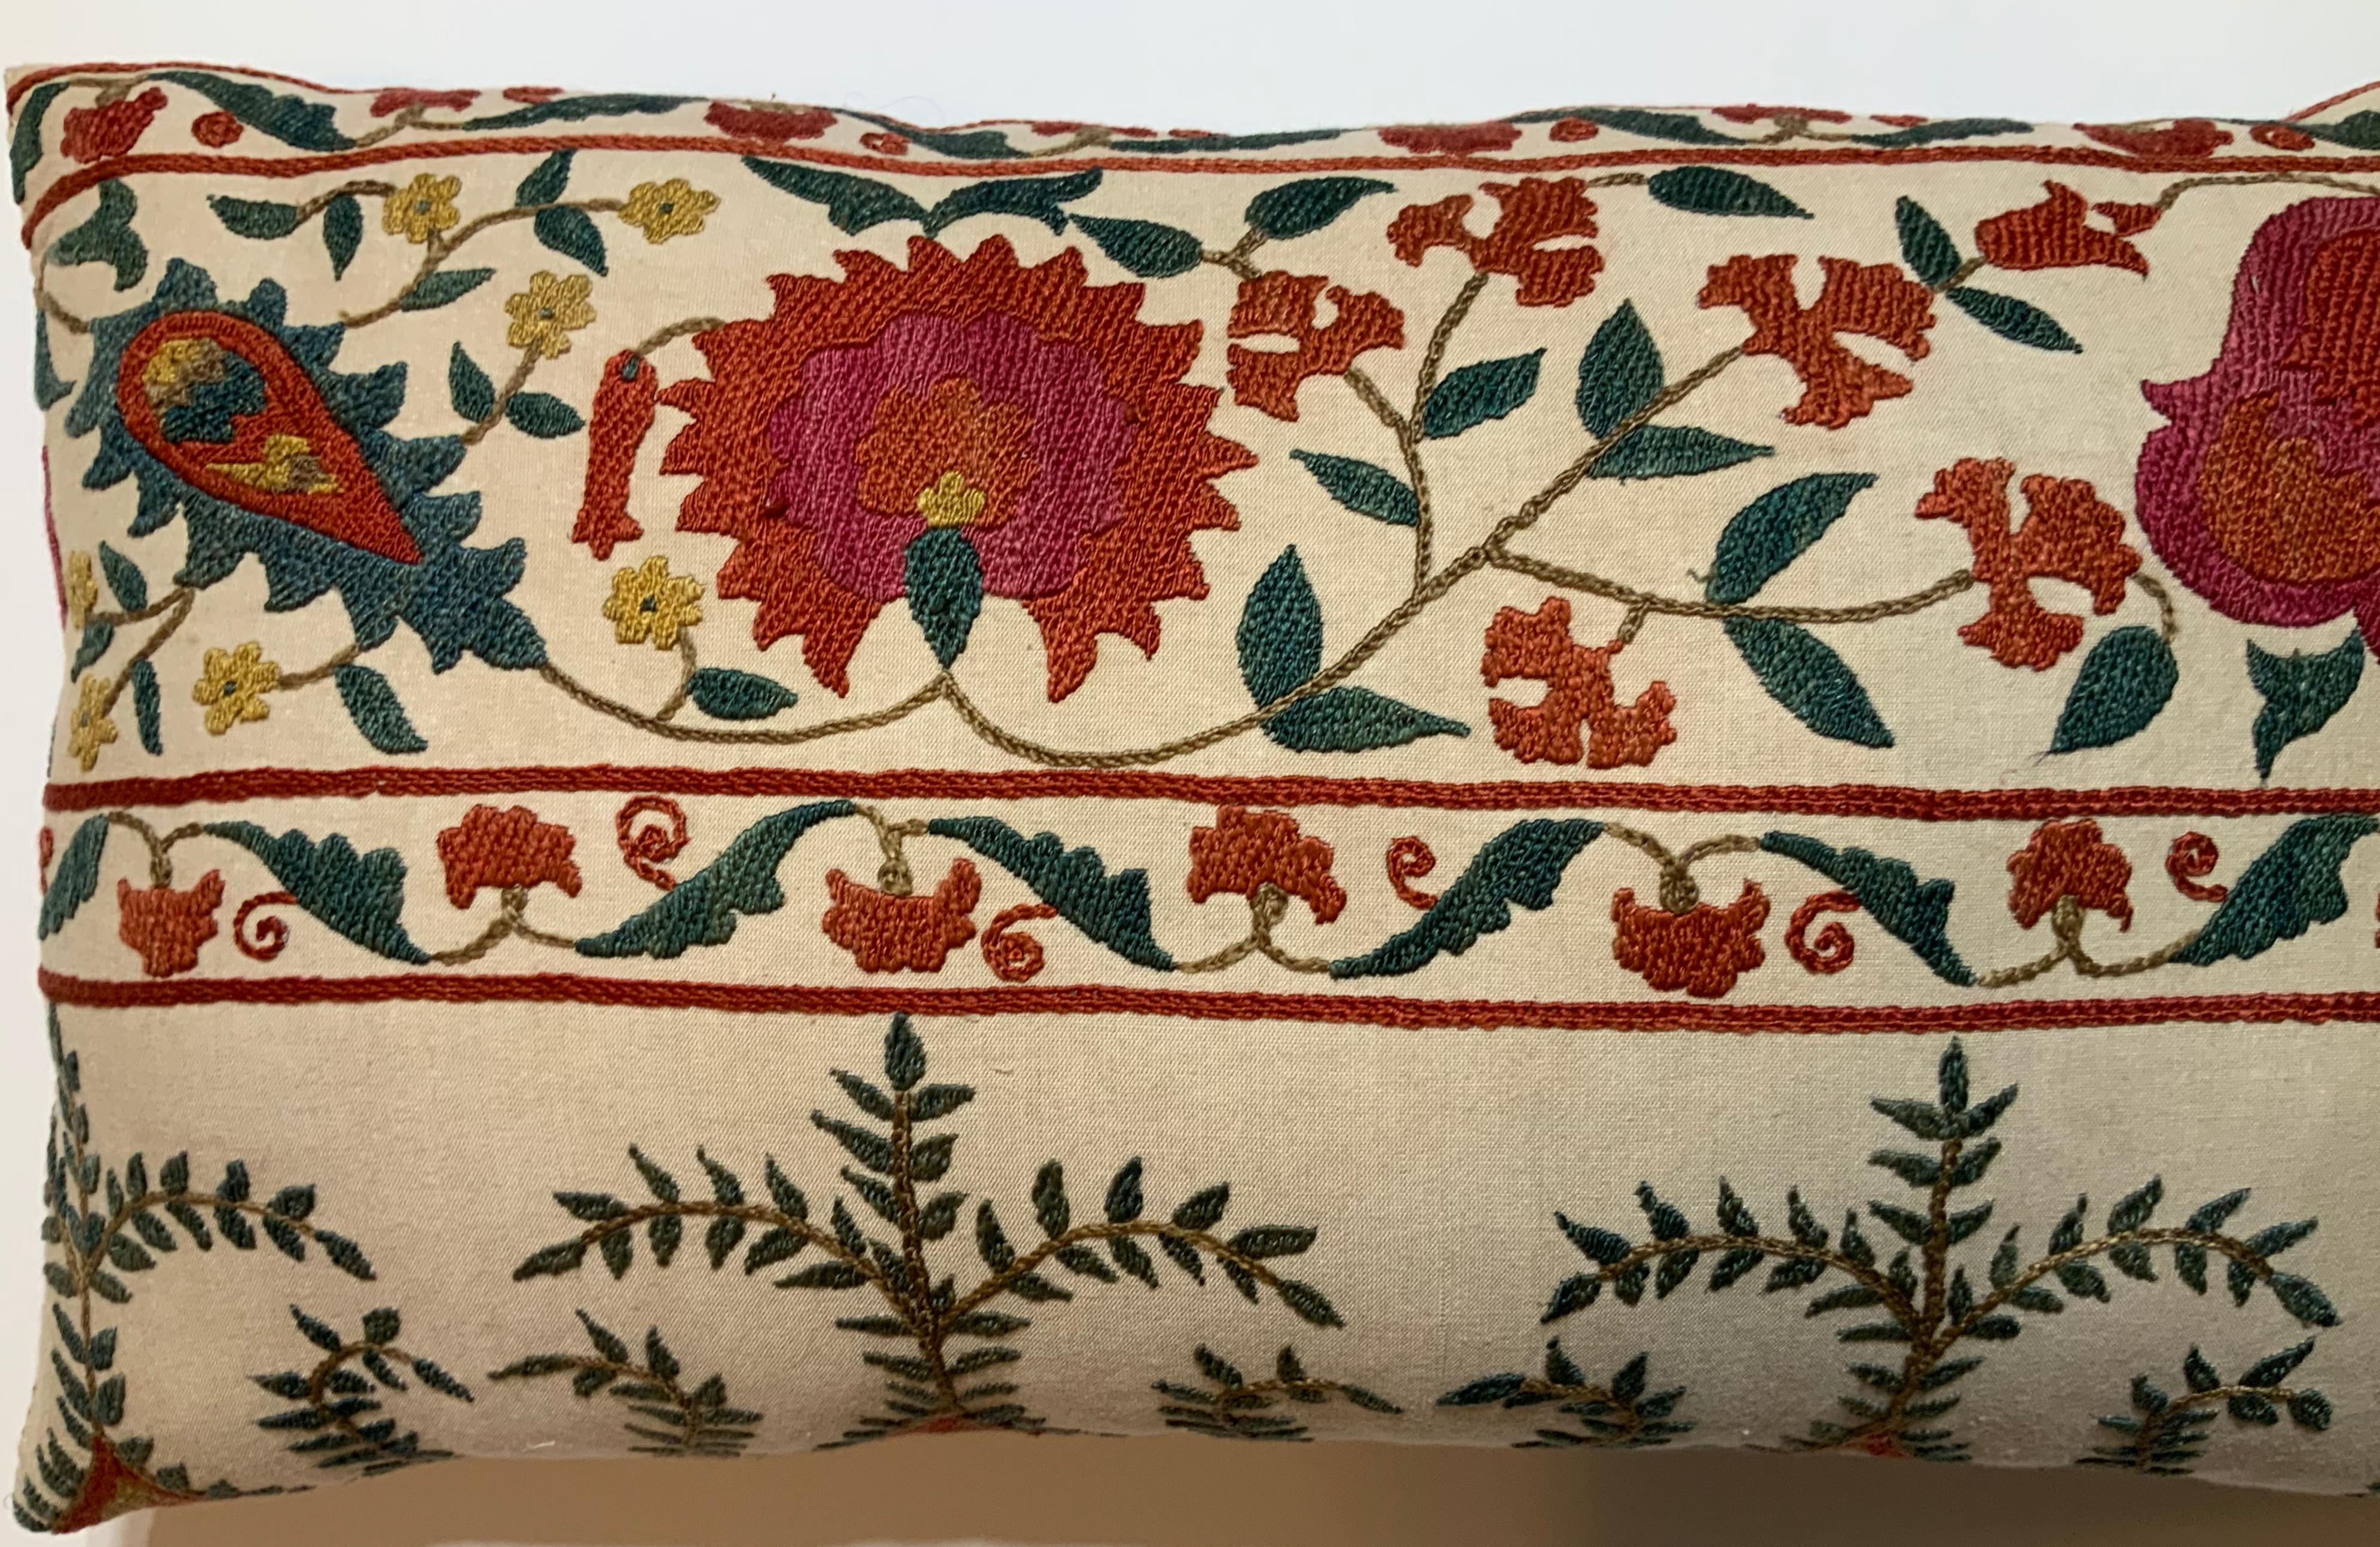 Uzbek Hand Embroidered Suzani Pillow